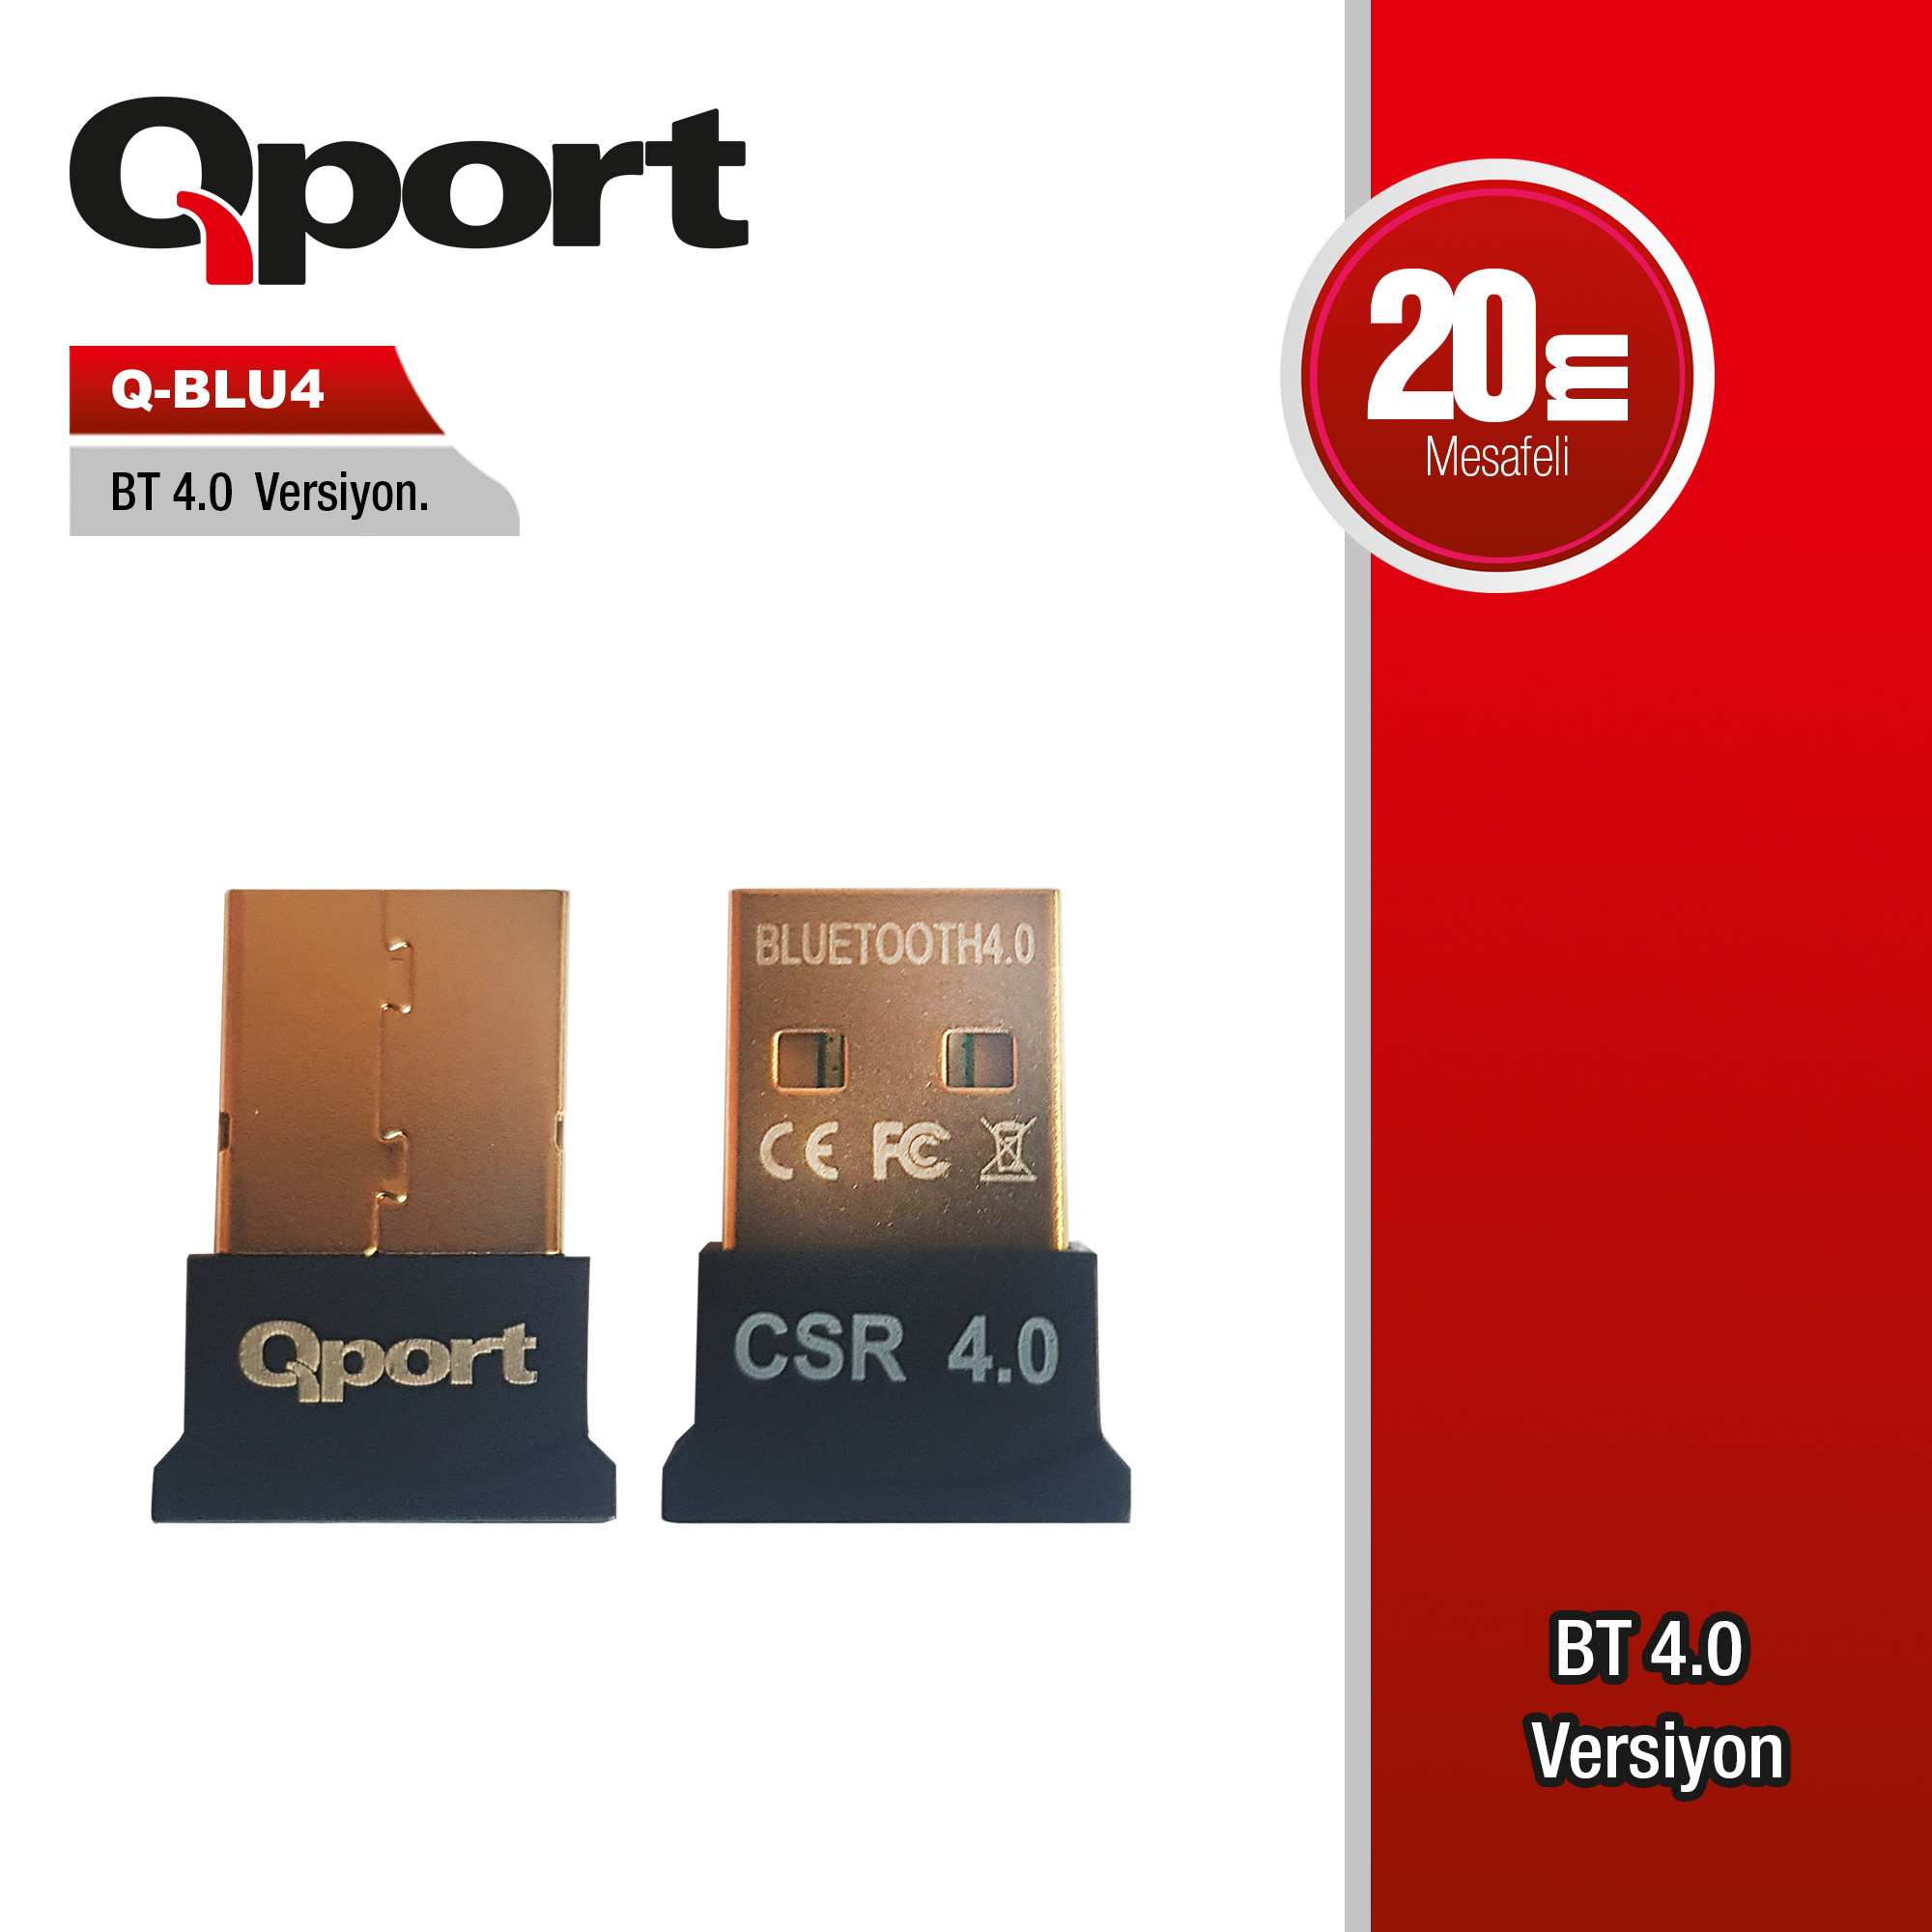 QPORT BLUETOOTH V4.0 USB ADAPTOR (Q-BLU4)